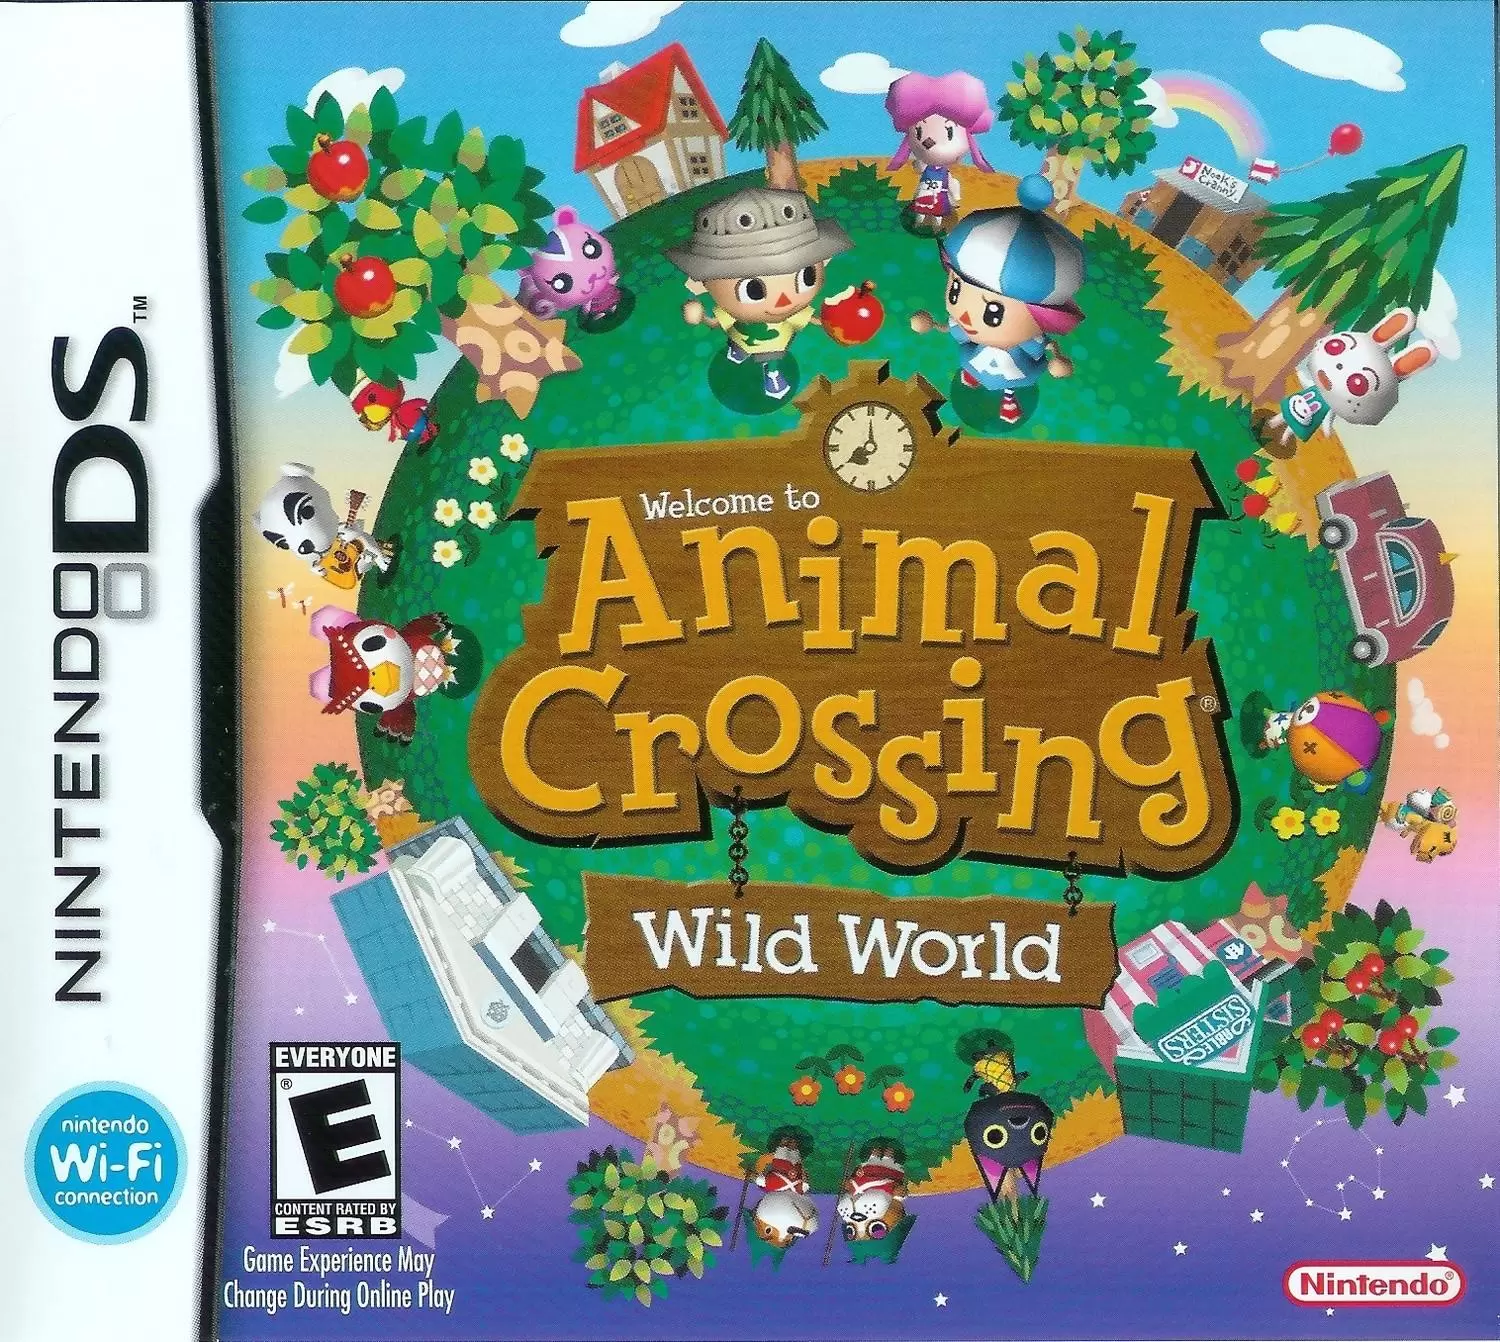 Nintendo DS Games - Animal Crossing: Wild World